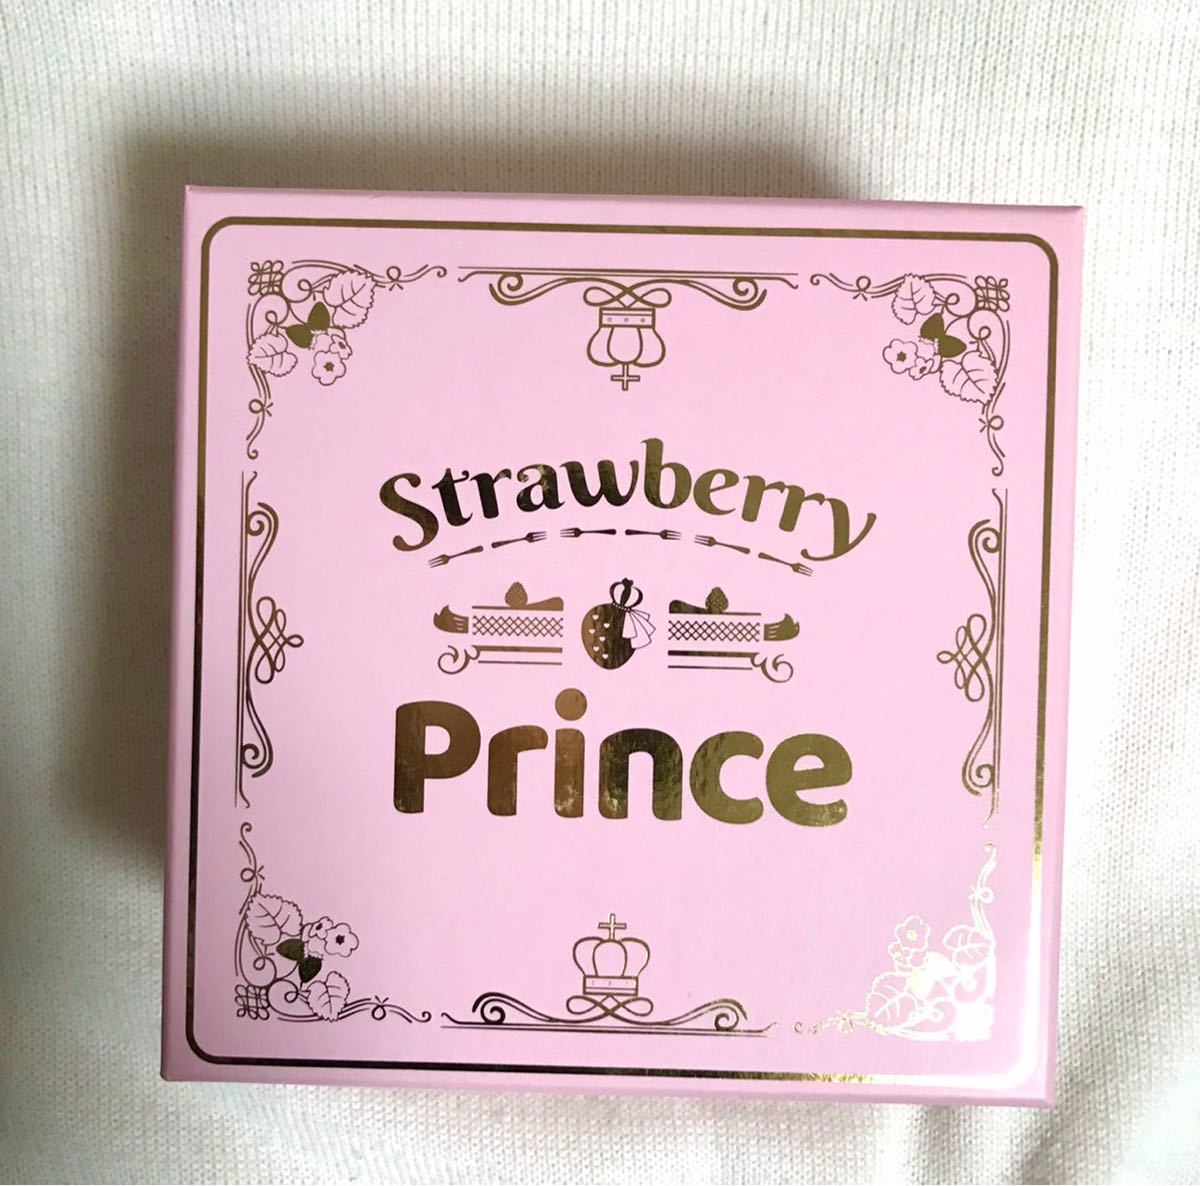 ★Strawberry Prince★【完全生産限定盤 A】豪華タイムカプセルBOX♪